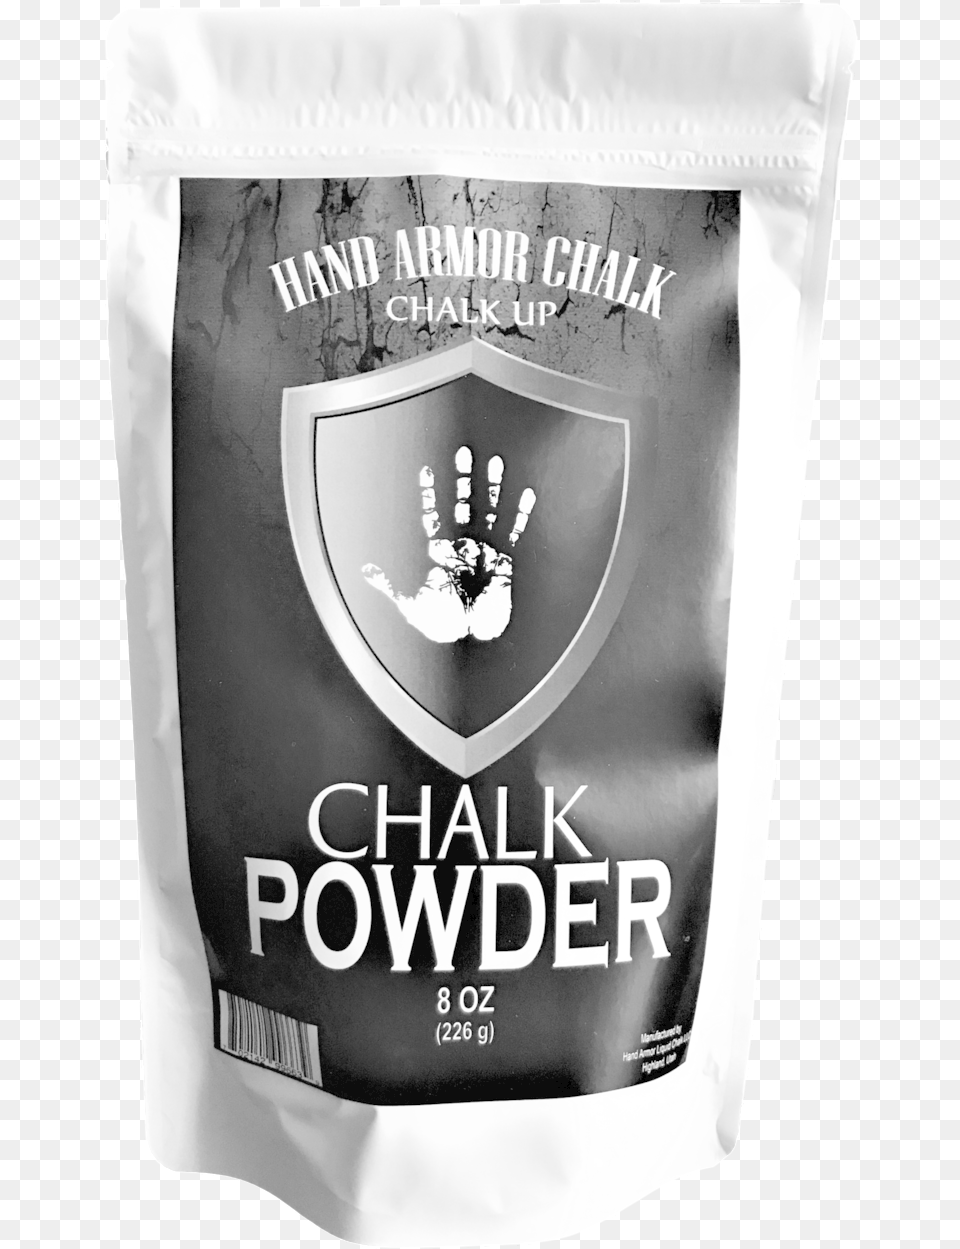 Hand Armor Chalk Powder 8 Oz, Can, Tin Png